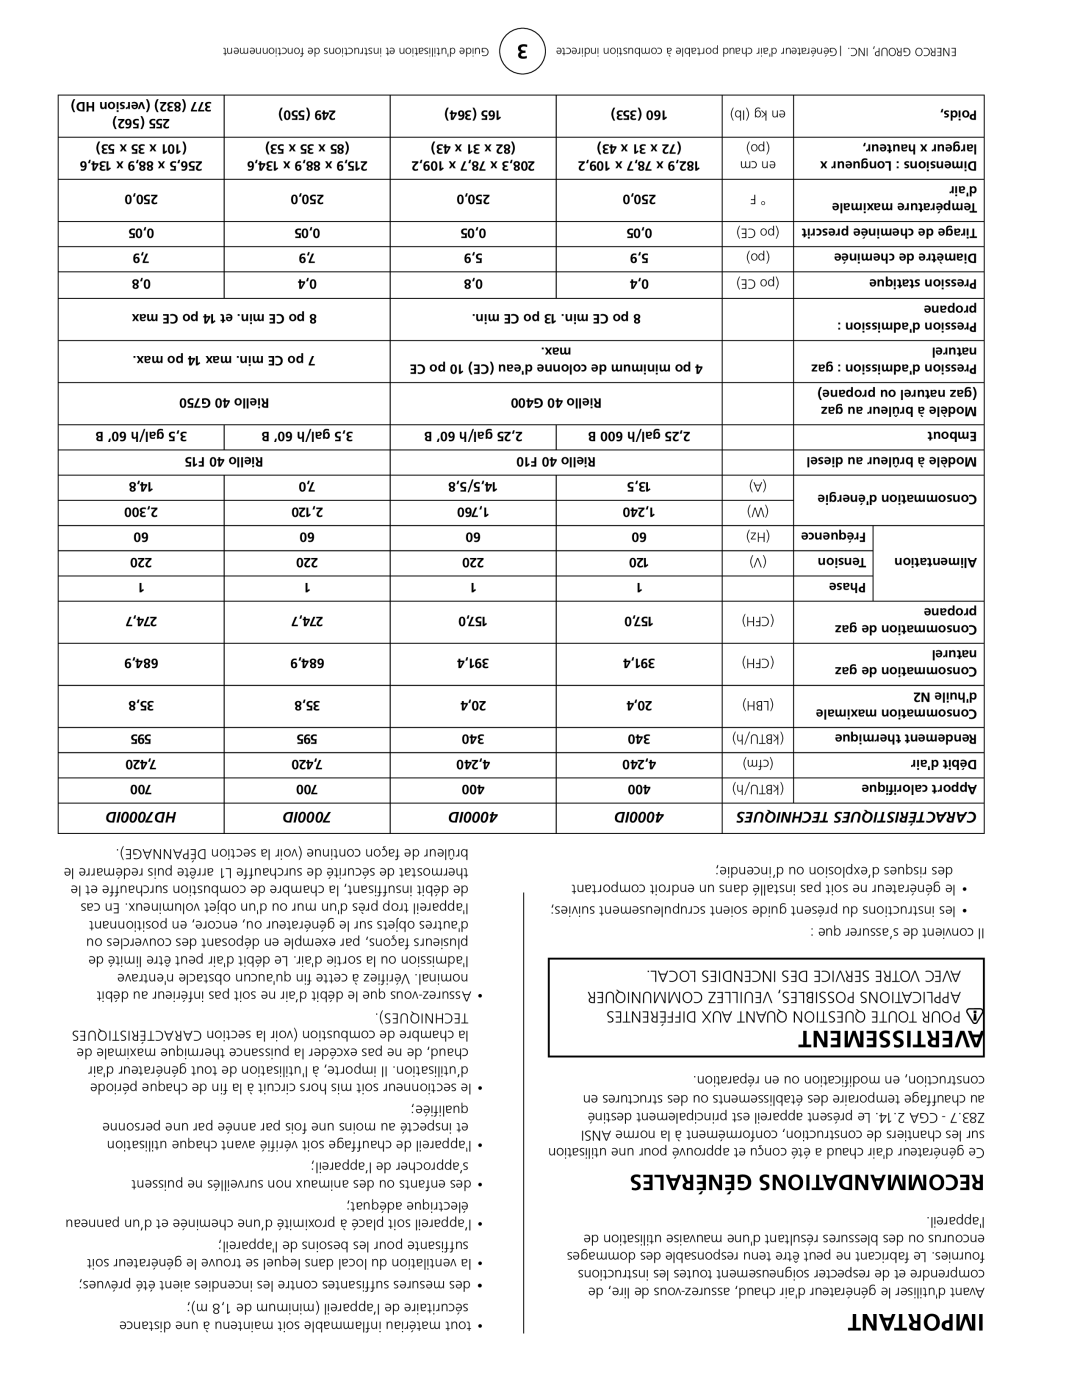 Enerco owner manual Générales Recommandations, HD7000ID, 4000ID 